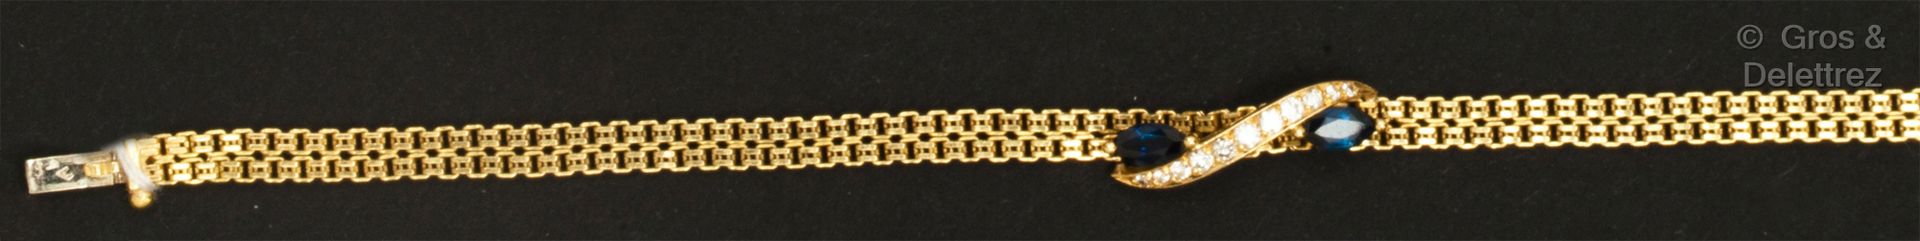 Null 灵活的黄金手镯，镶有一排明亮式切割钻石衬托的脐带蓝宝石图案。长度：6.5厘米。毛重：9.6克。